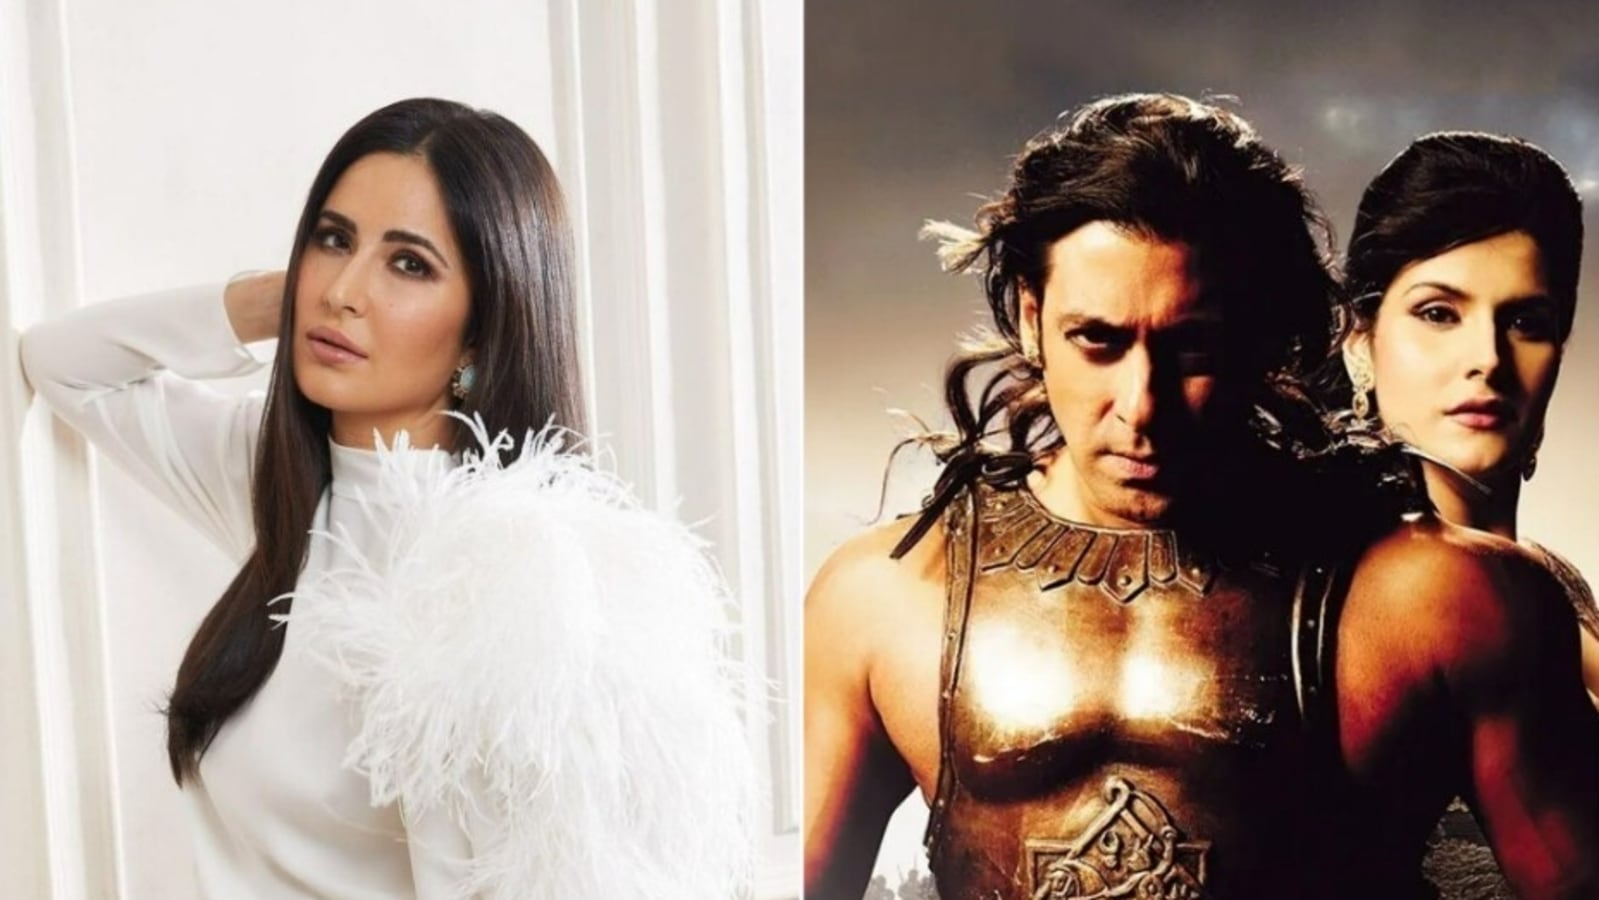 Salman Khan And Priyanka Chopra Ki Xxx - When Katrina Kaif spoke about Salman working with 'girls who look like her'  | Bollywood - Hindustan Times